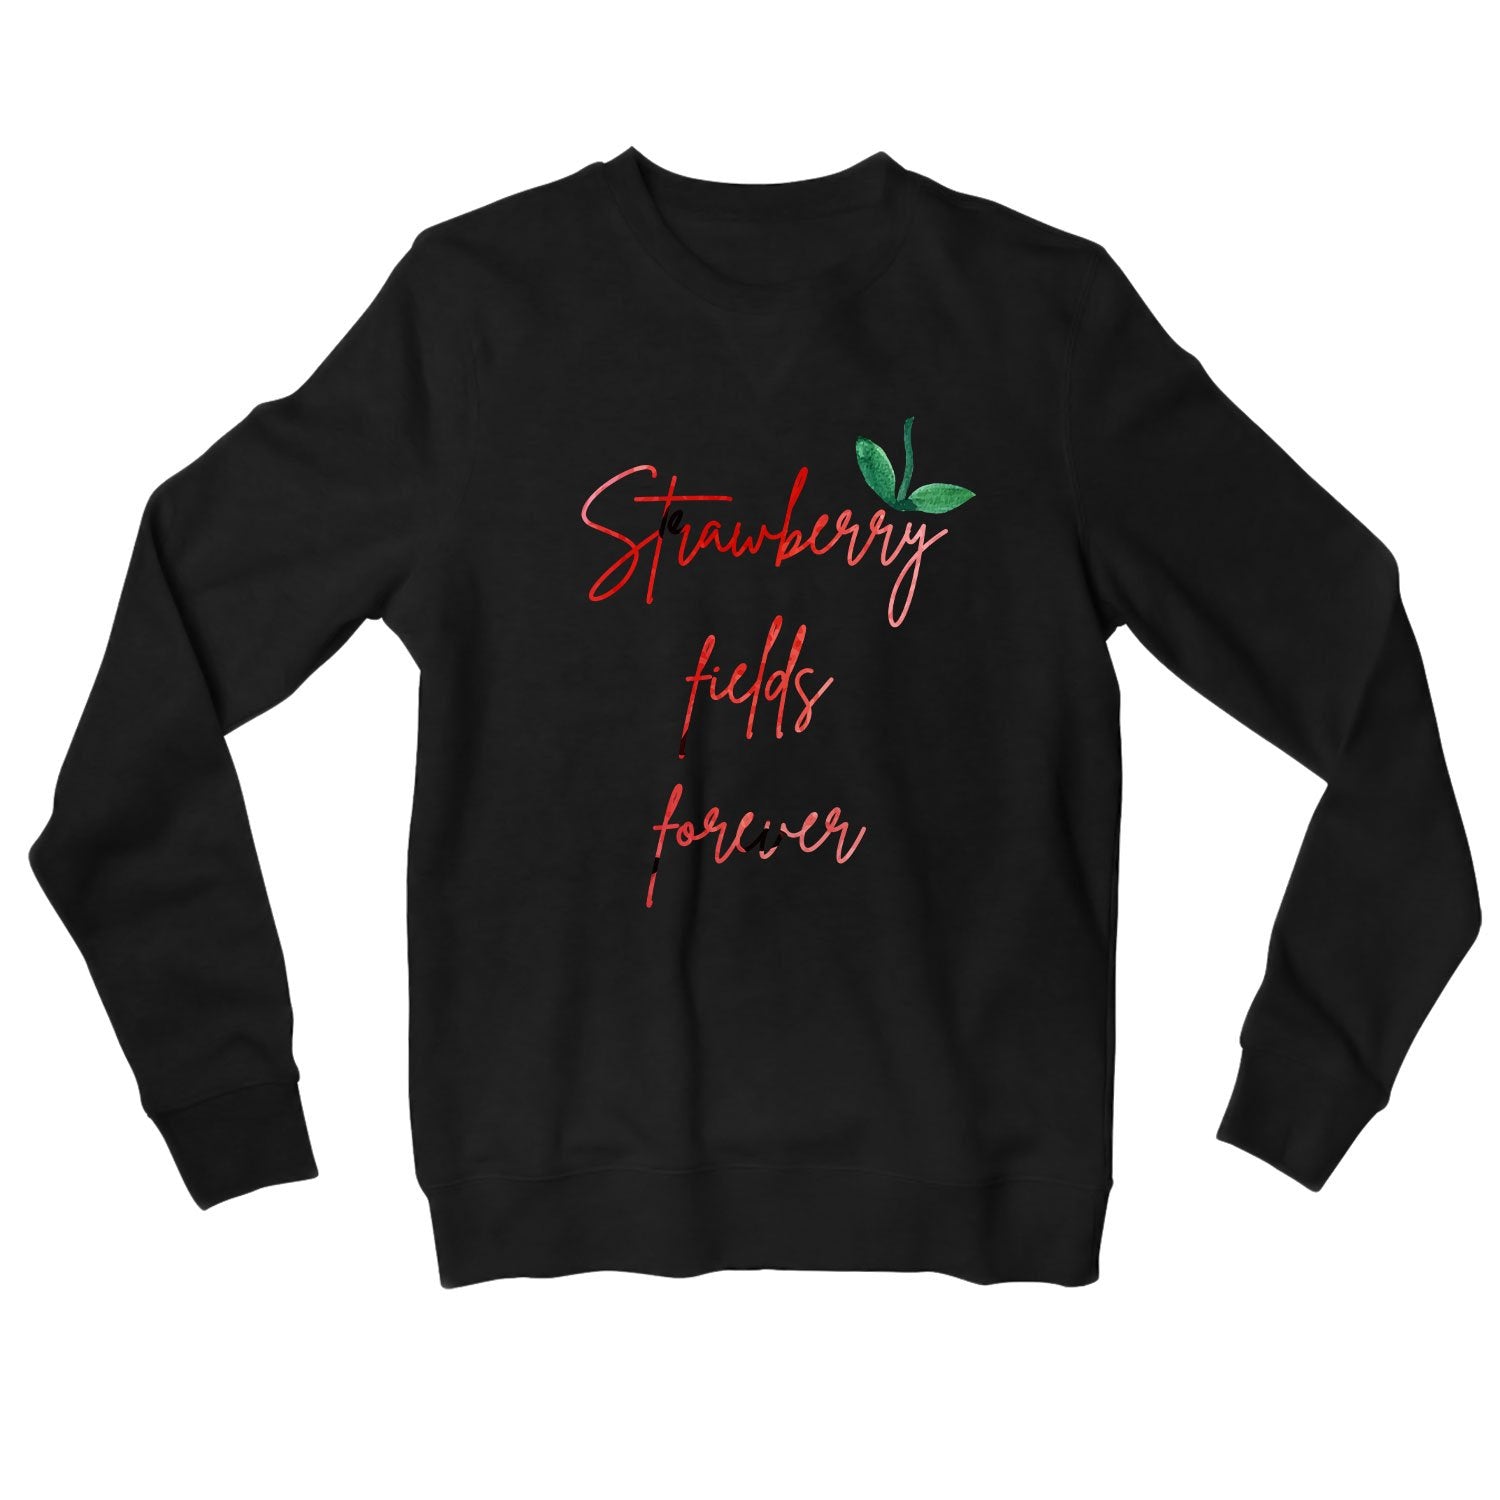 The Beatles Sweatshirt - Strawberry Fields Forever Sweatshirt The Banyan Tee TBT